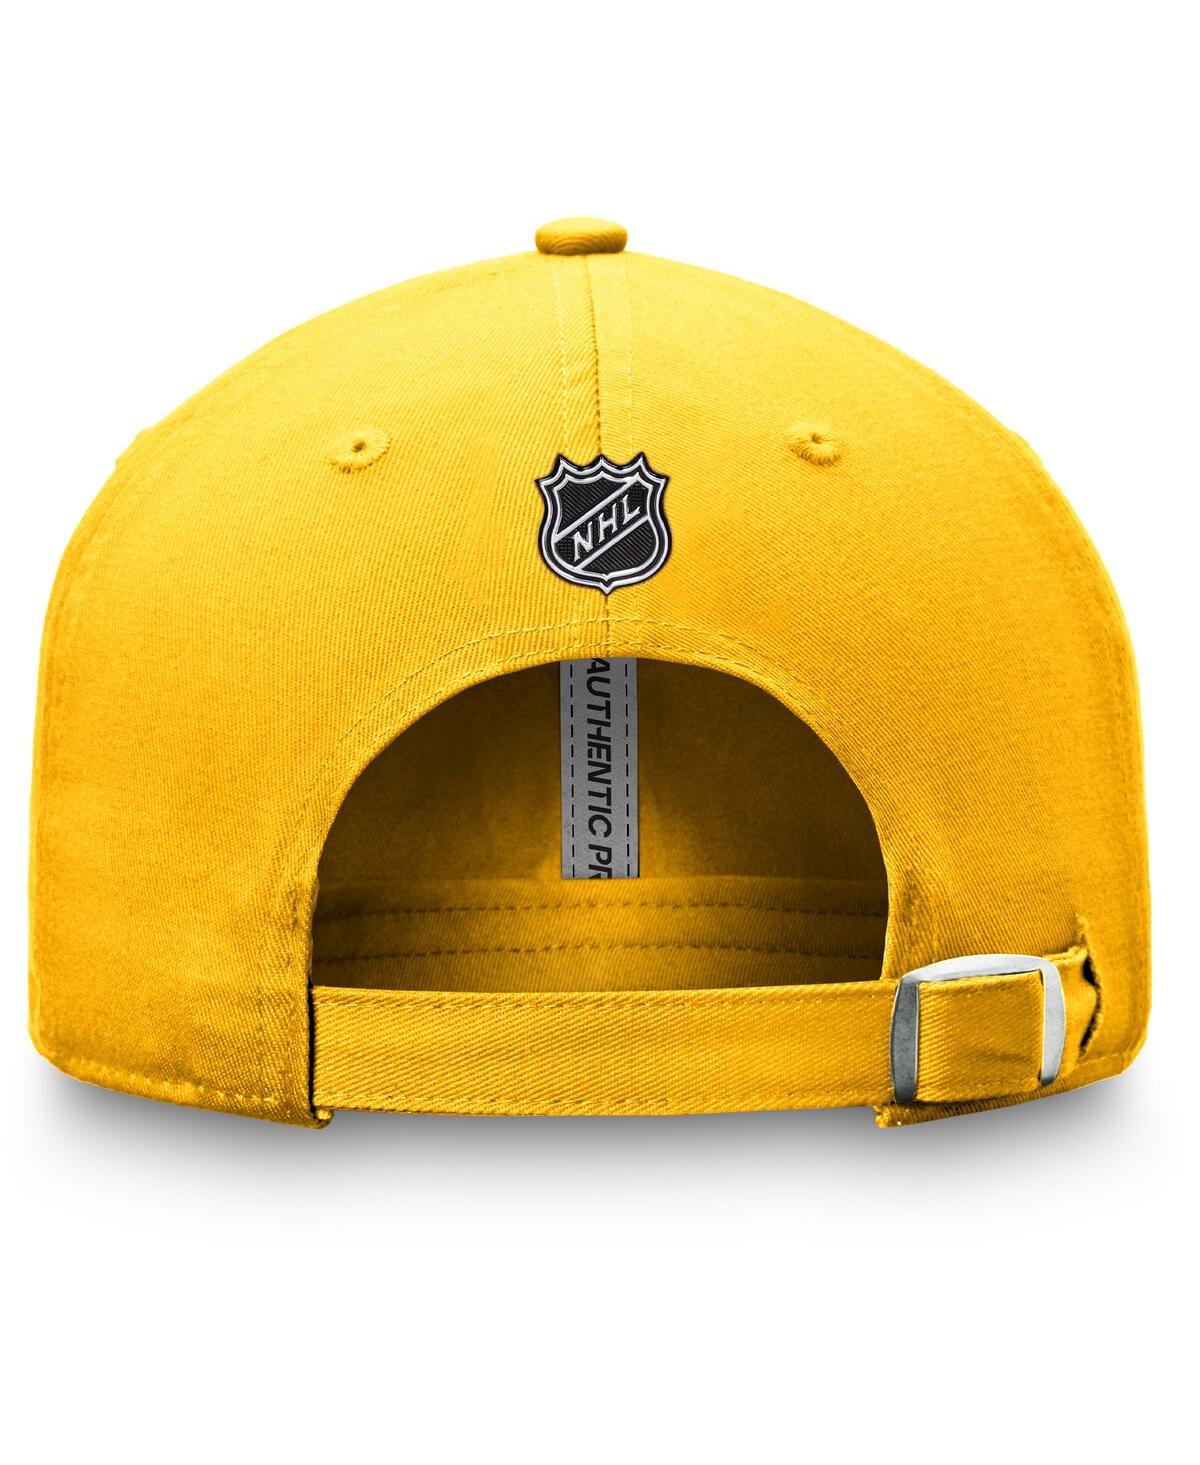 Shop Fanatics Men's  Gold Nashville Predators Authentic Pro Rink Adjustable Hat